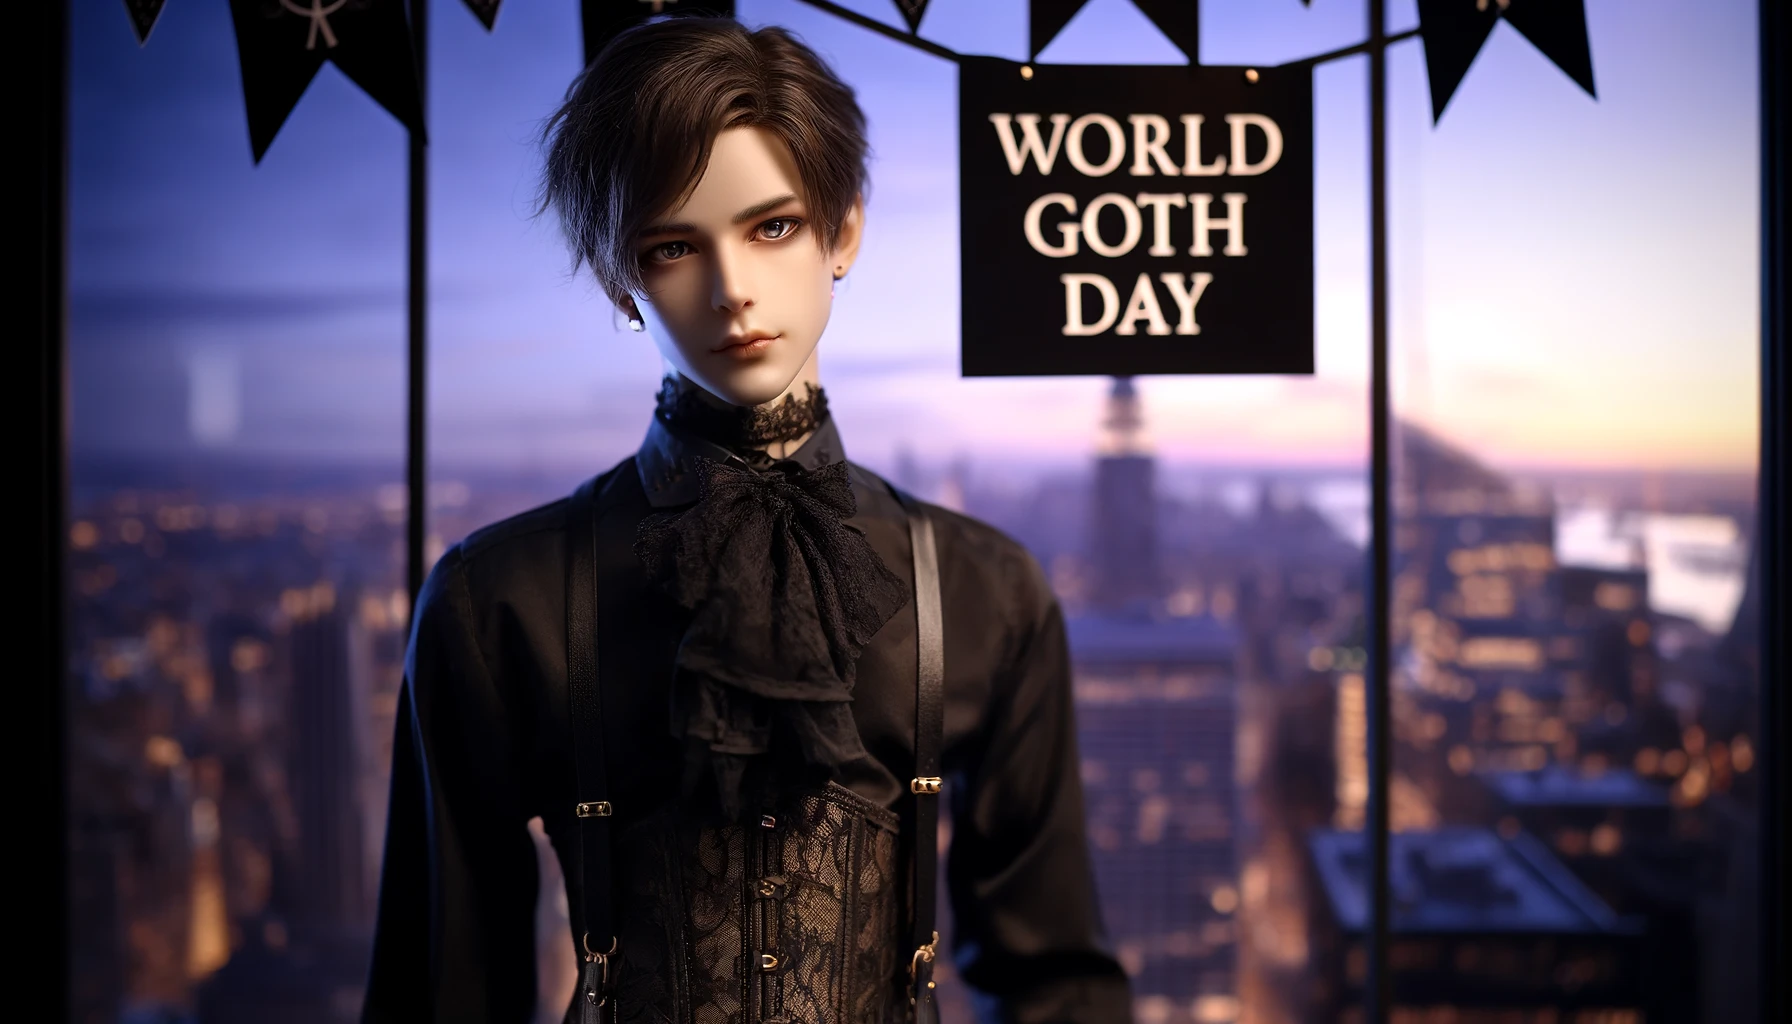 Creative World Goth Day Text Ideas